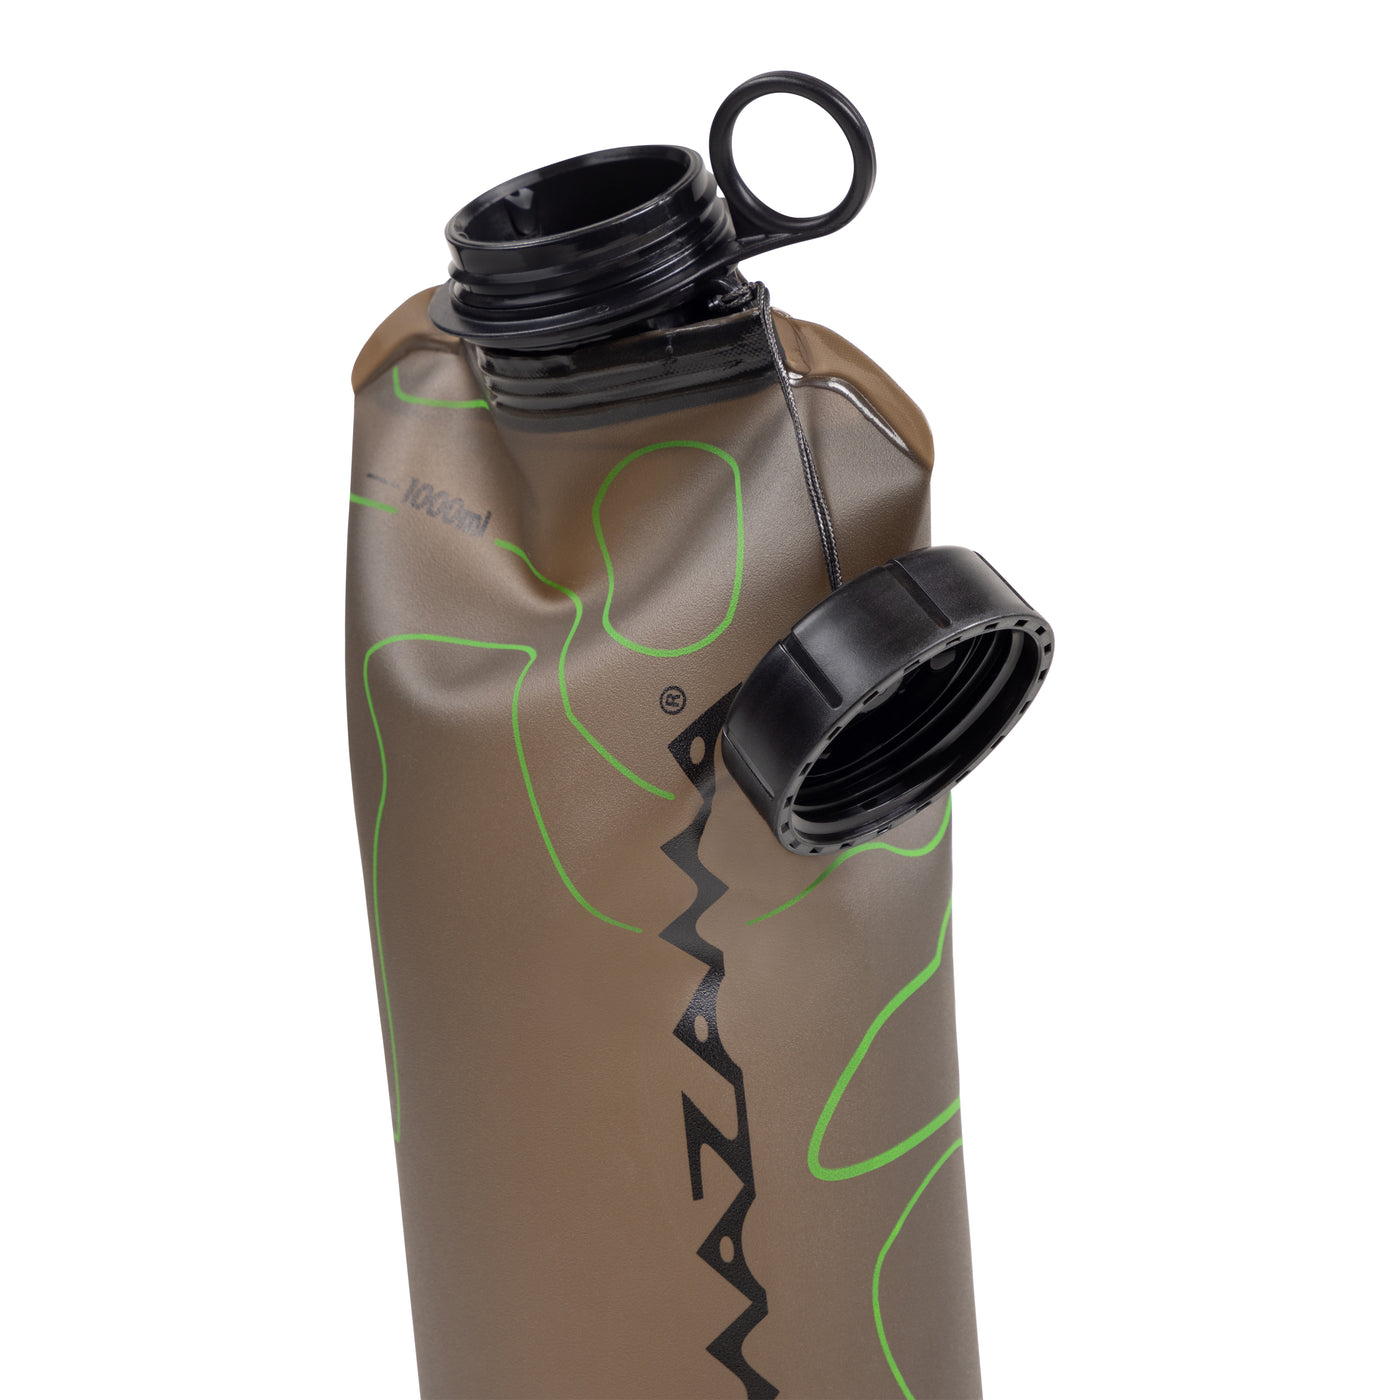  Mazama Collapsible Soft Sport Bottle/Flask/Canteen